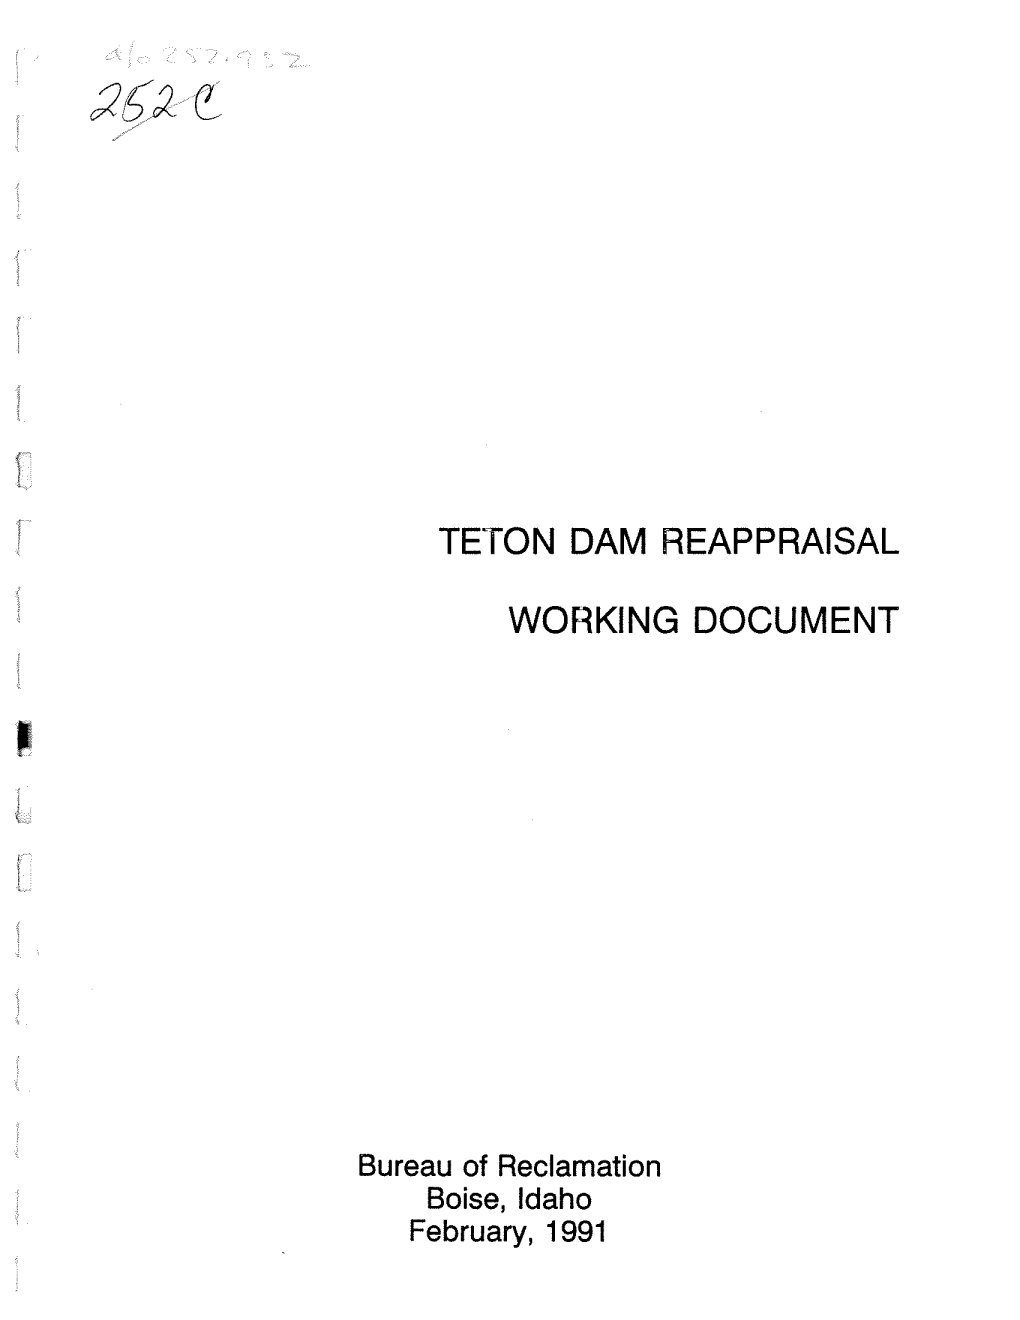 Teton Dam Reappraisal Working Document